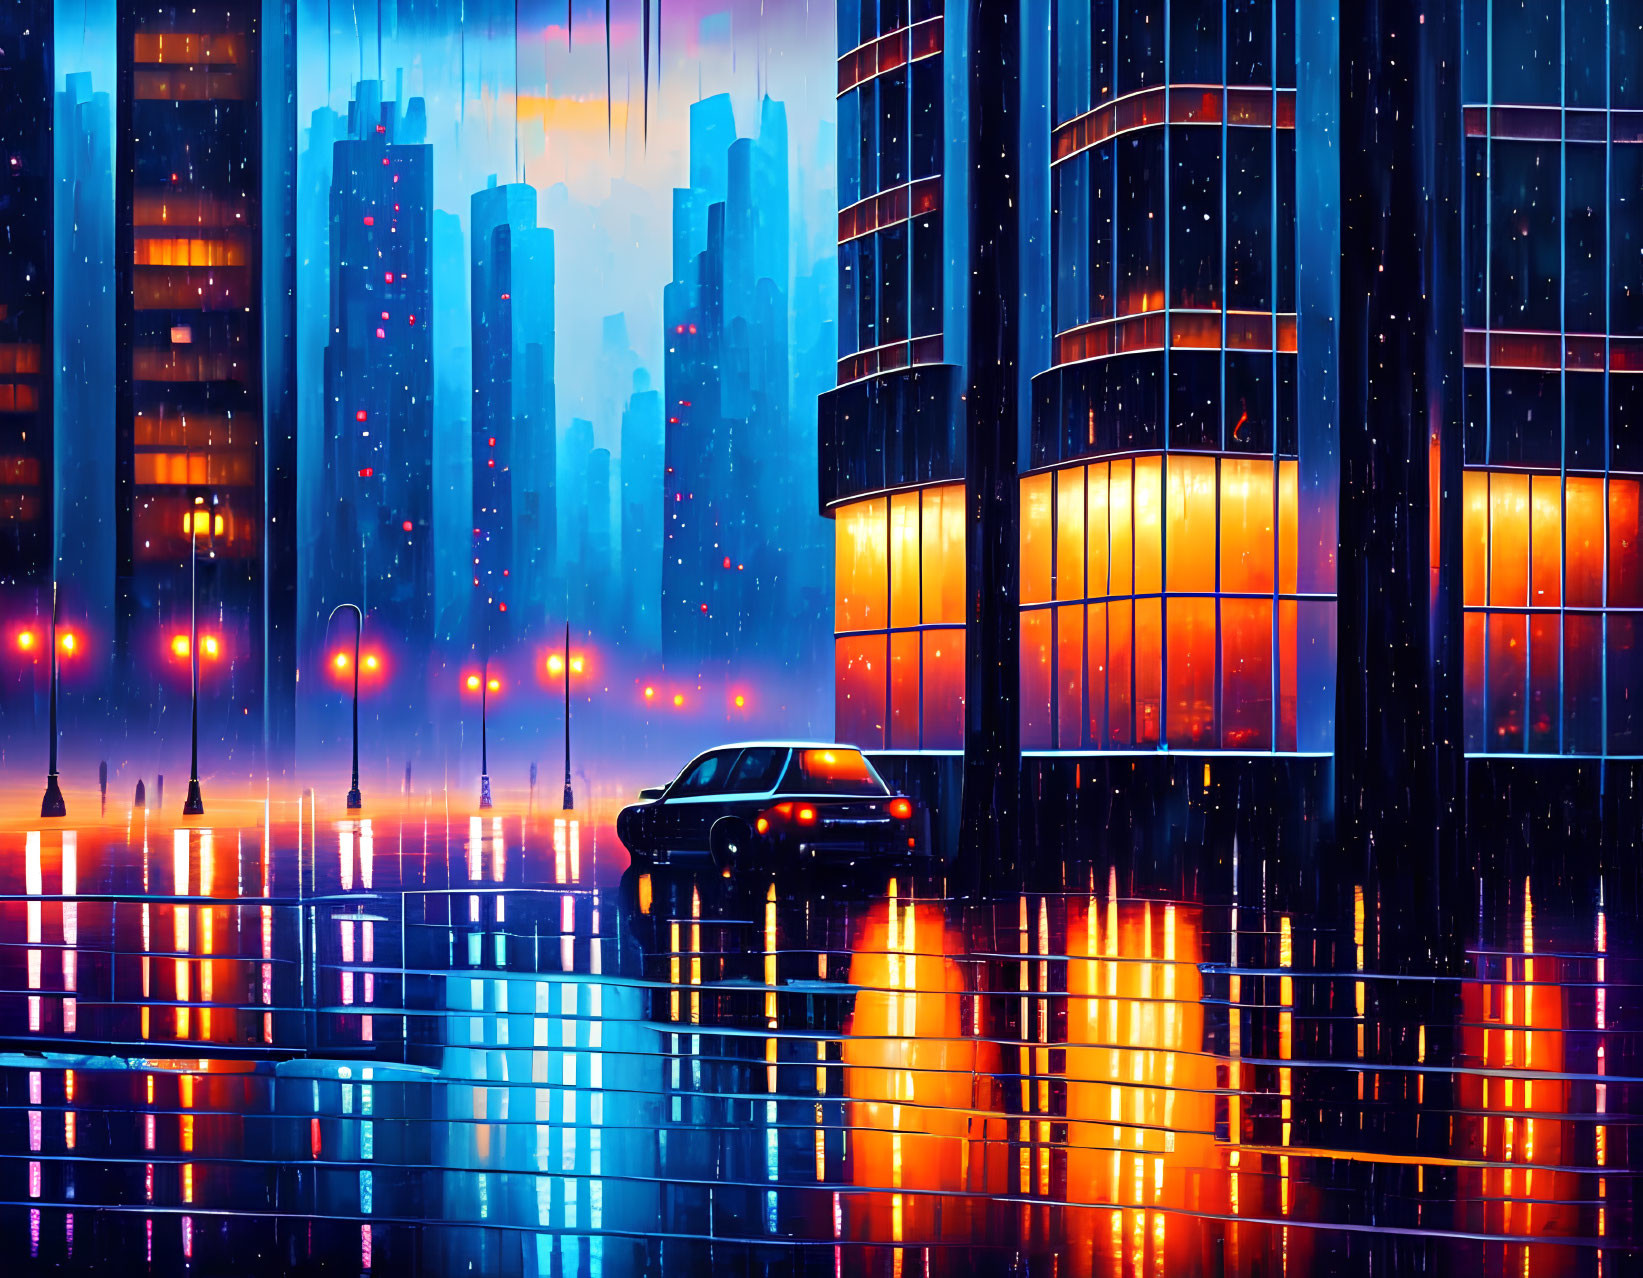 City night scene: car headlights reflect on wet street, neon buildings under colorful sky.